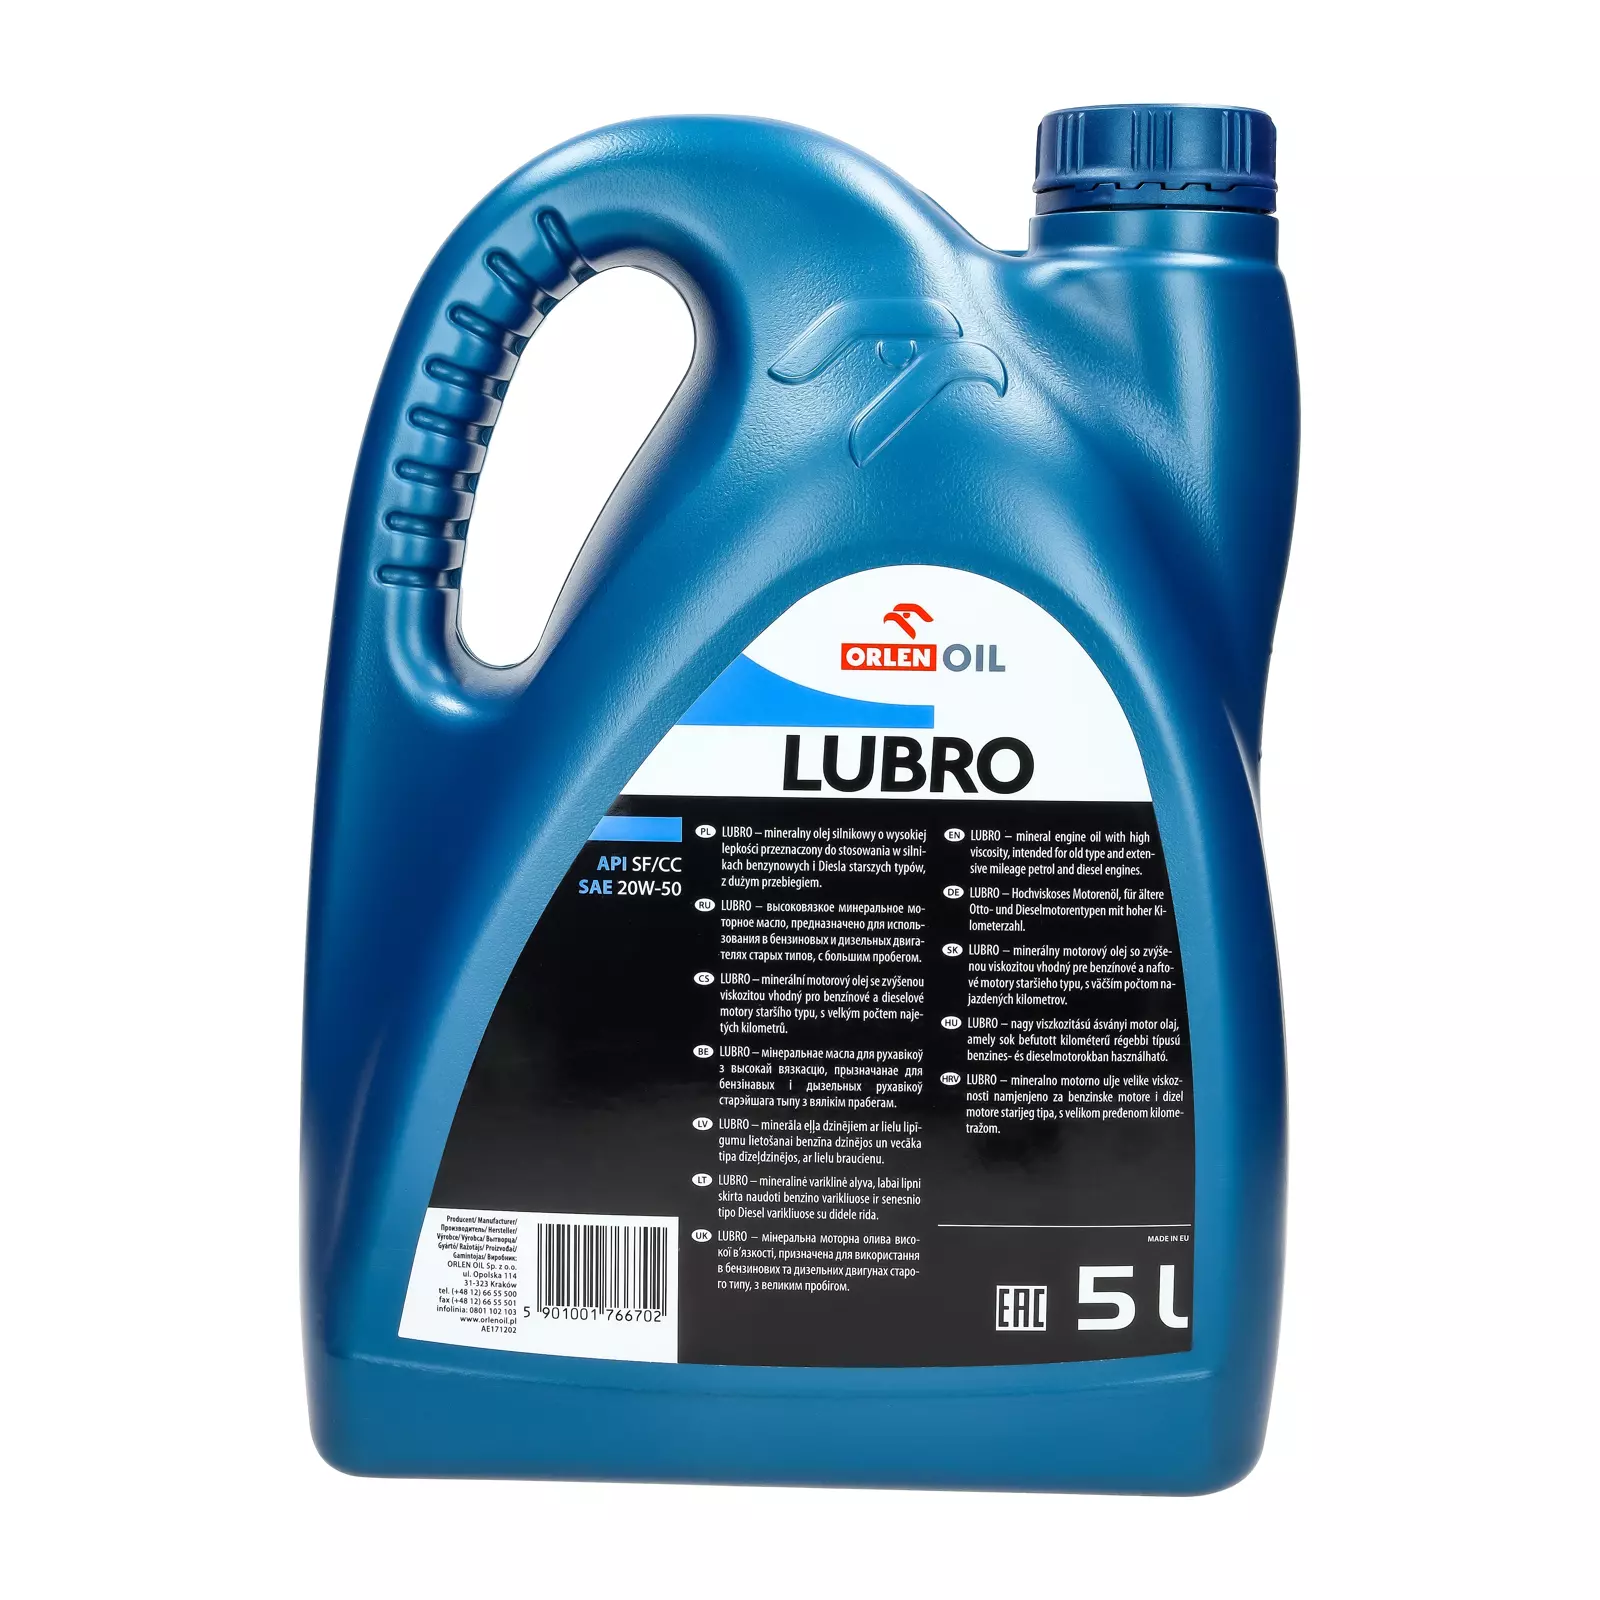 Моторное масло Orlen Oil Lubro SF/CC 20W-50 5л., QFS272B10